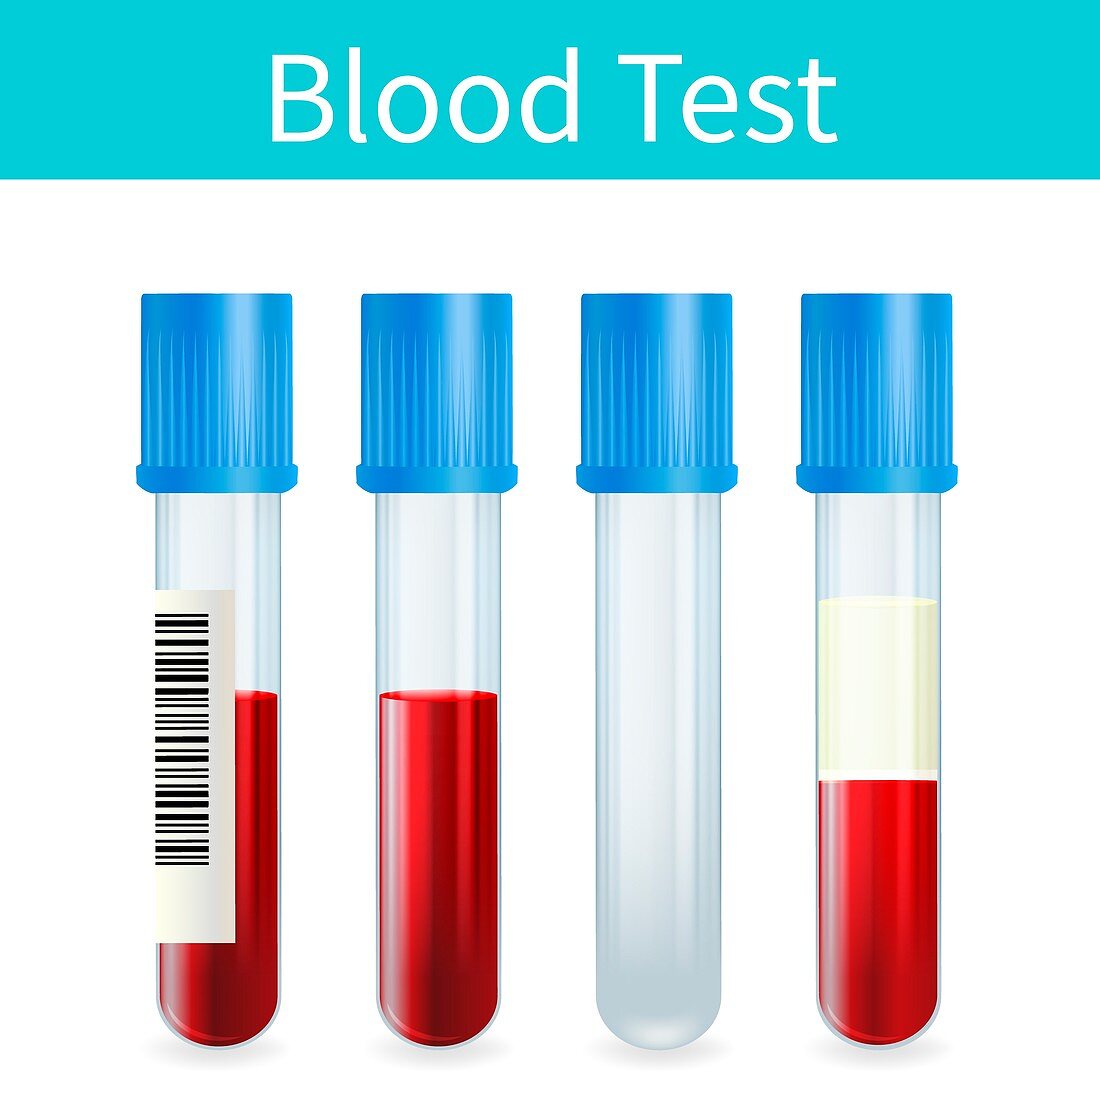 Blood sample tubes, illustration